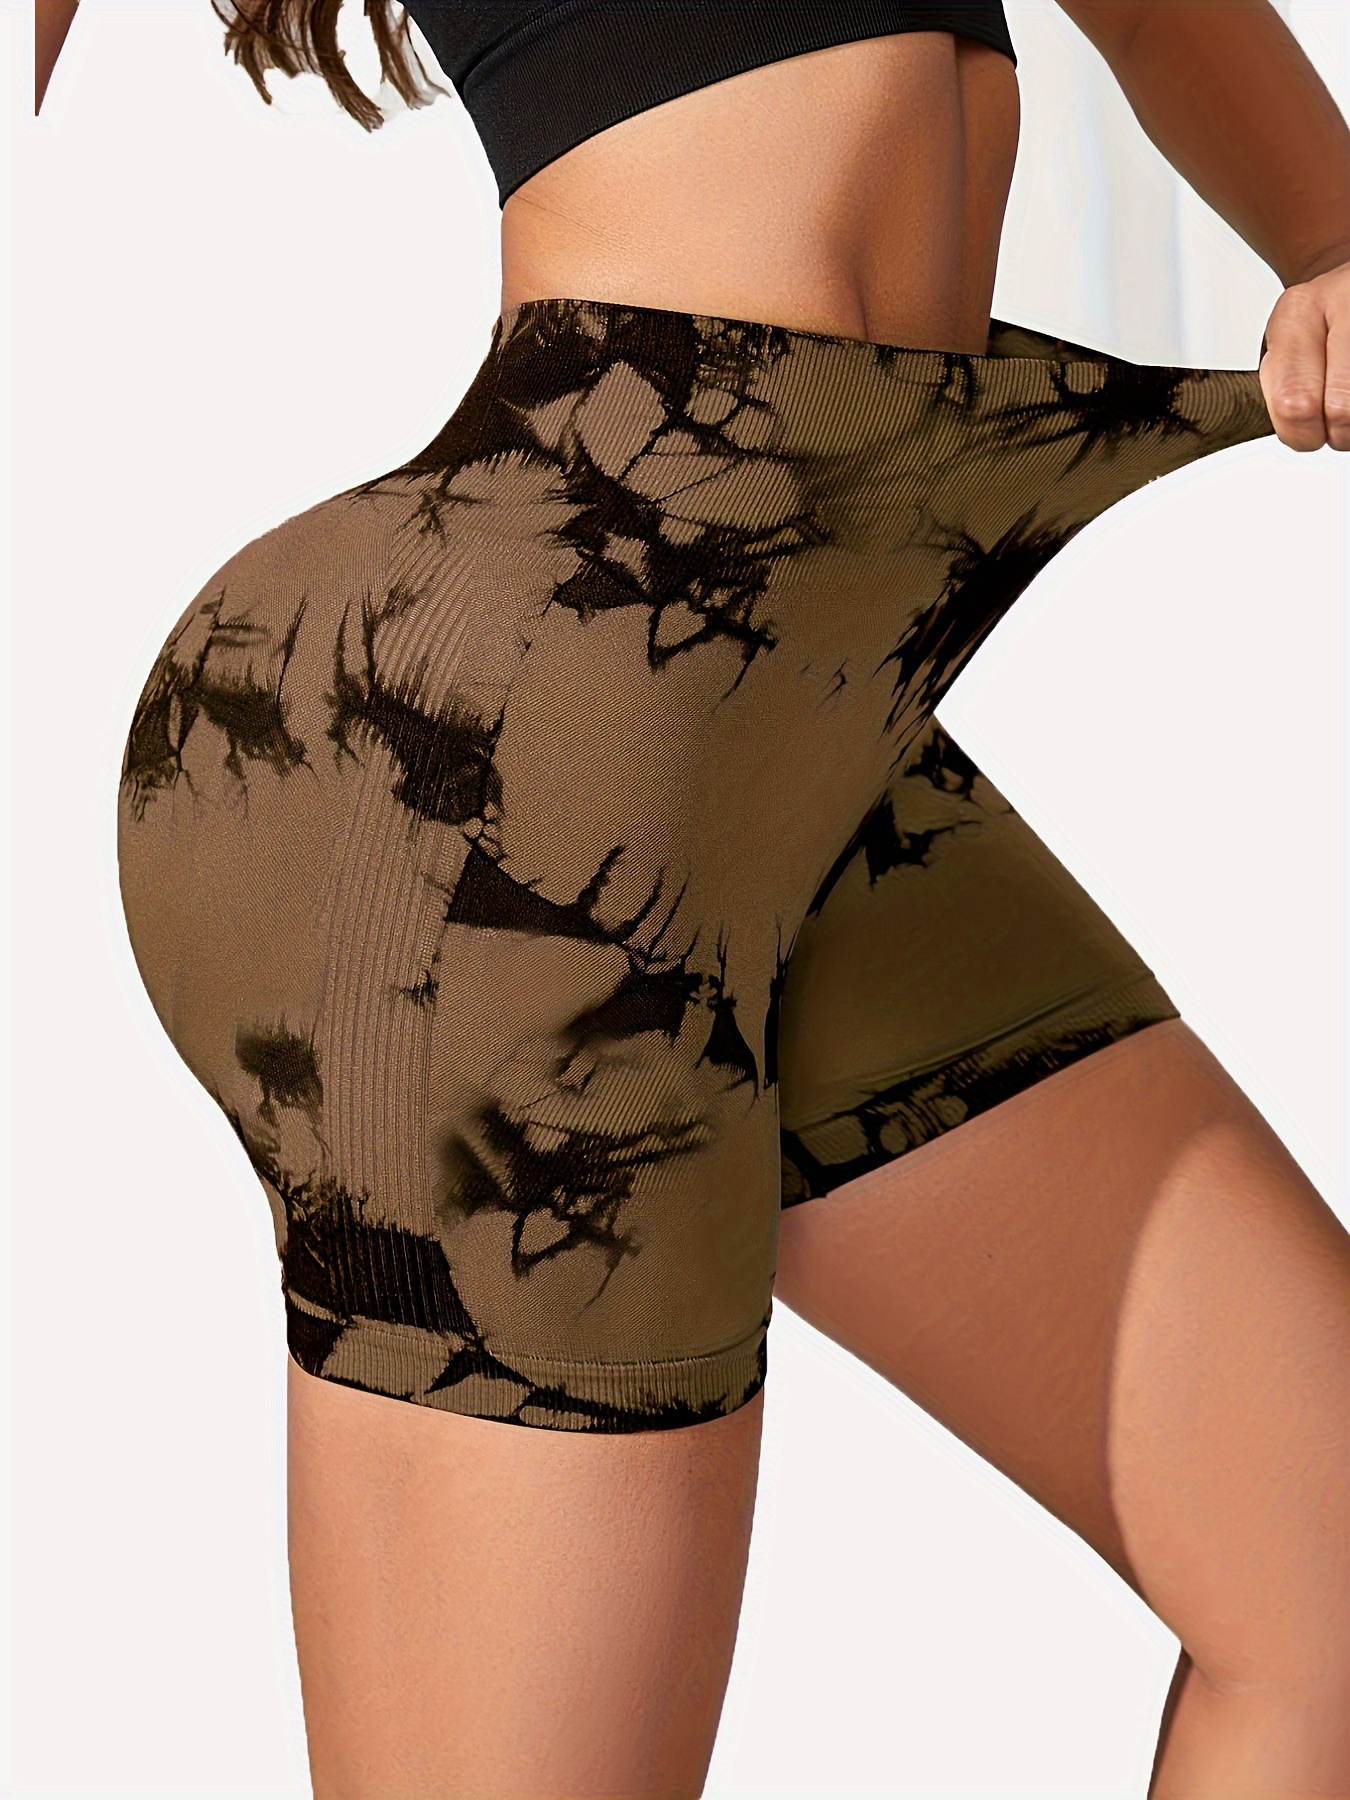 Buy OMKAGI Women Butt Lifting Booty Shorts 5 Tie Dye Seamless